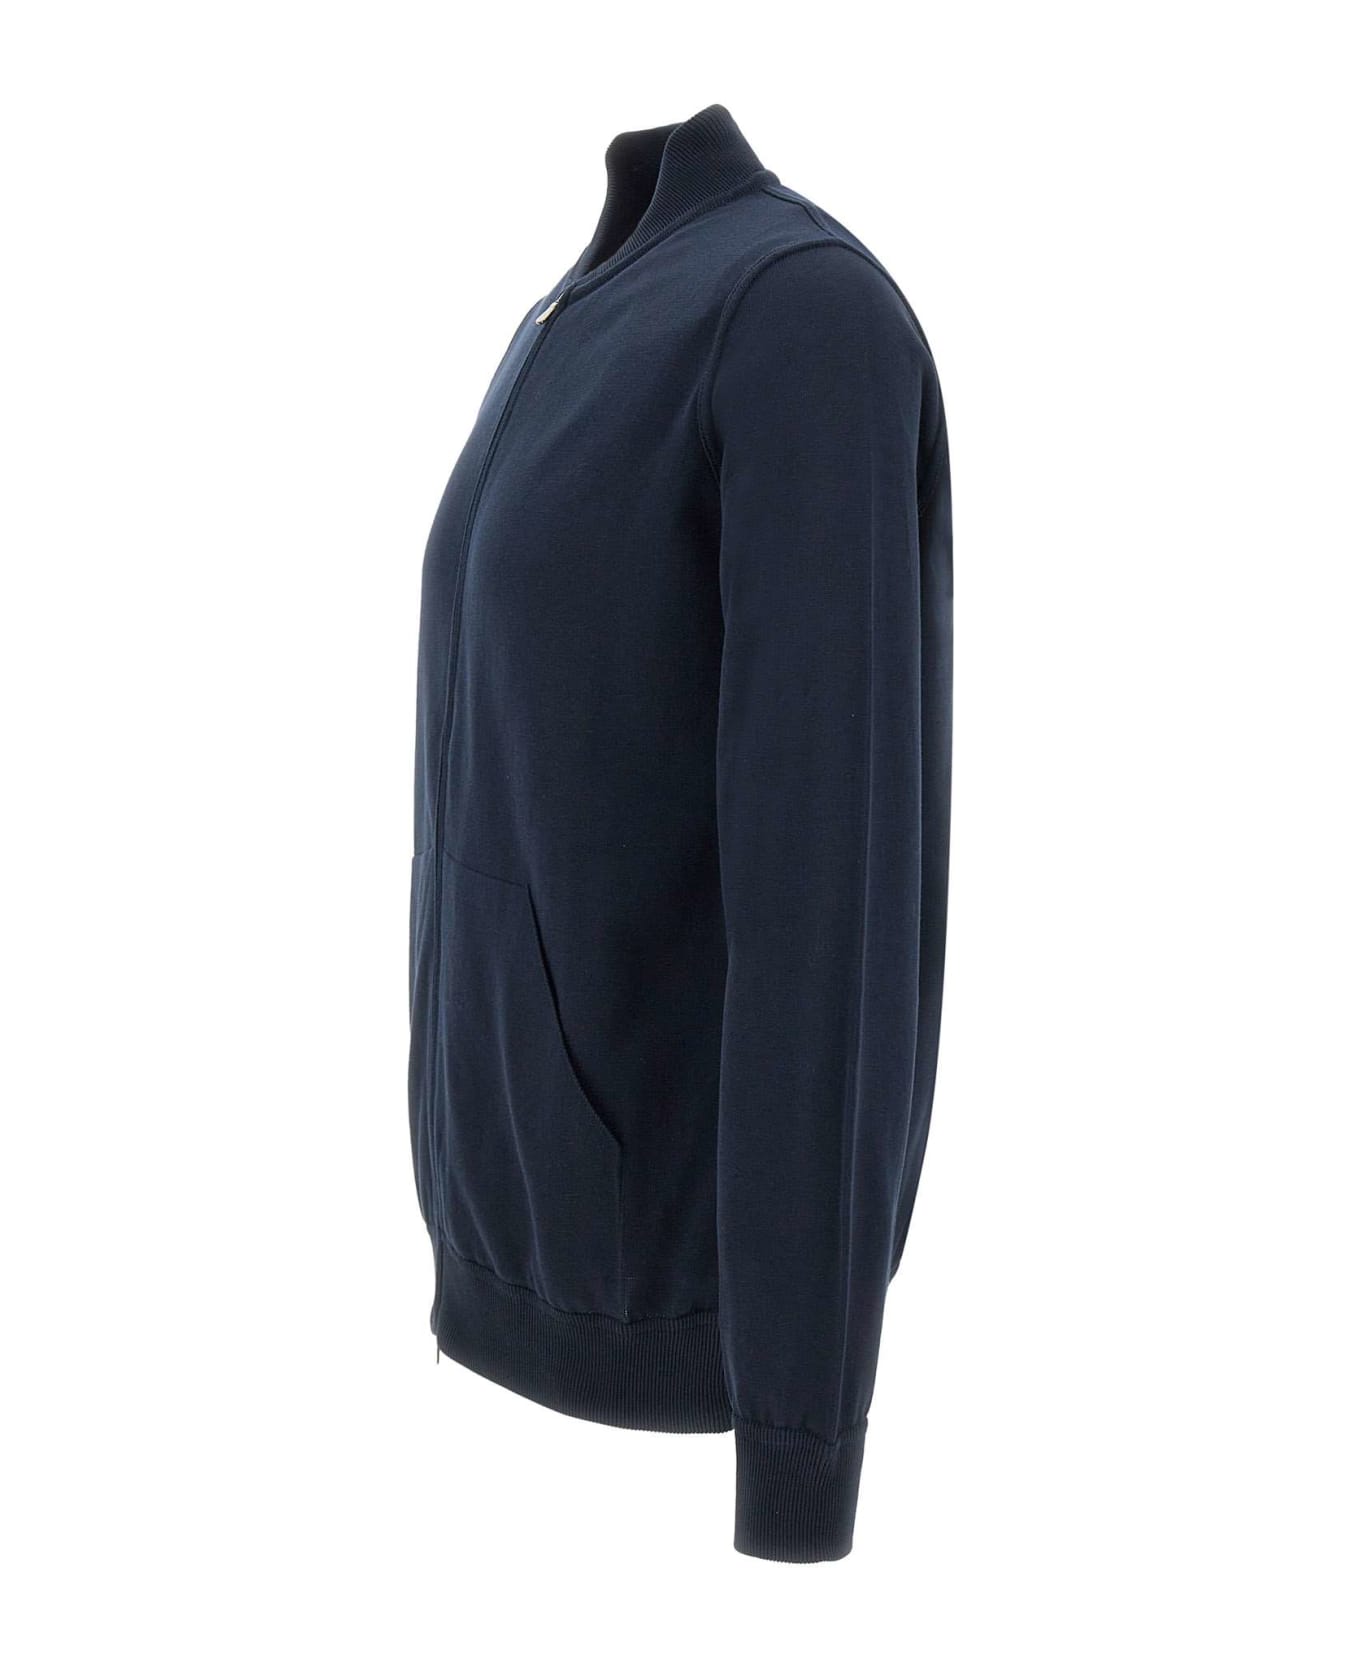 Filippo De Laurentiis Cotton Sweater - BLUE